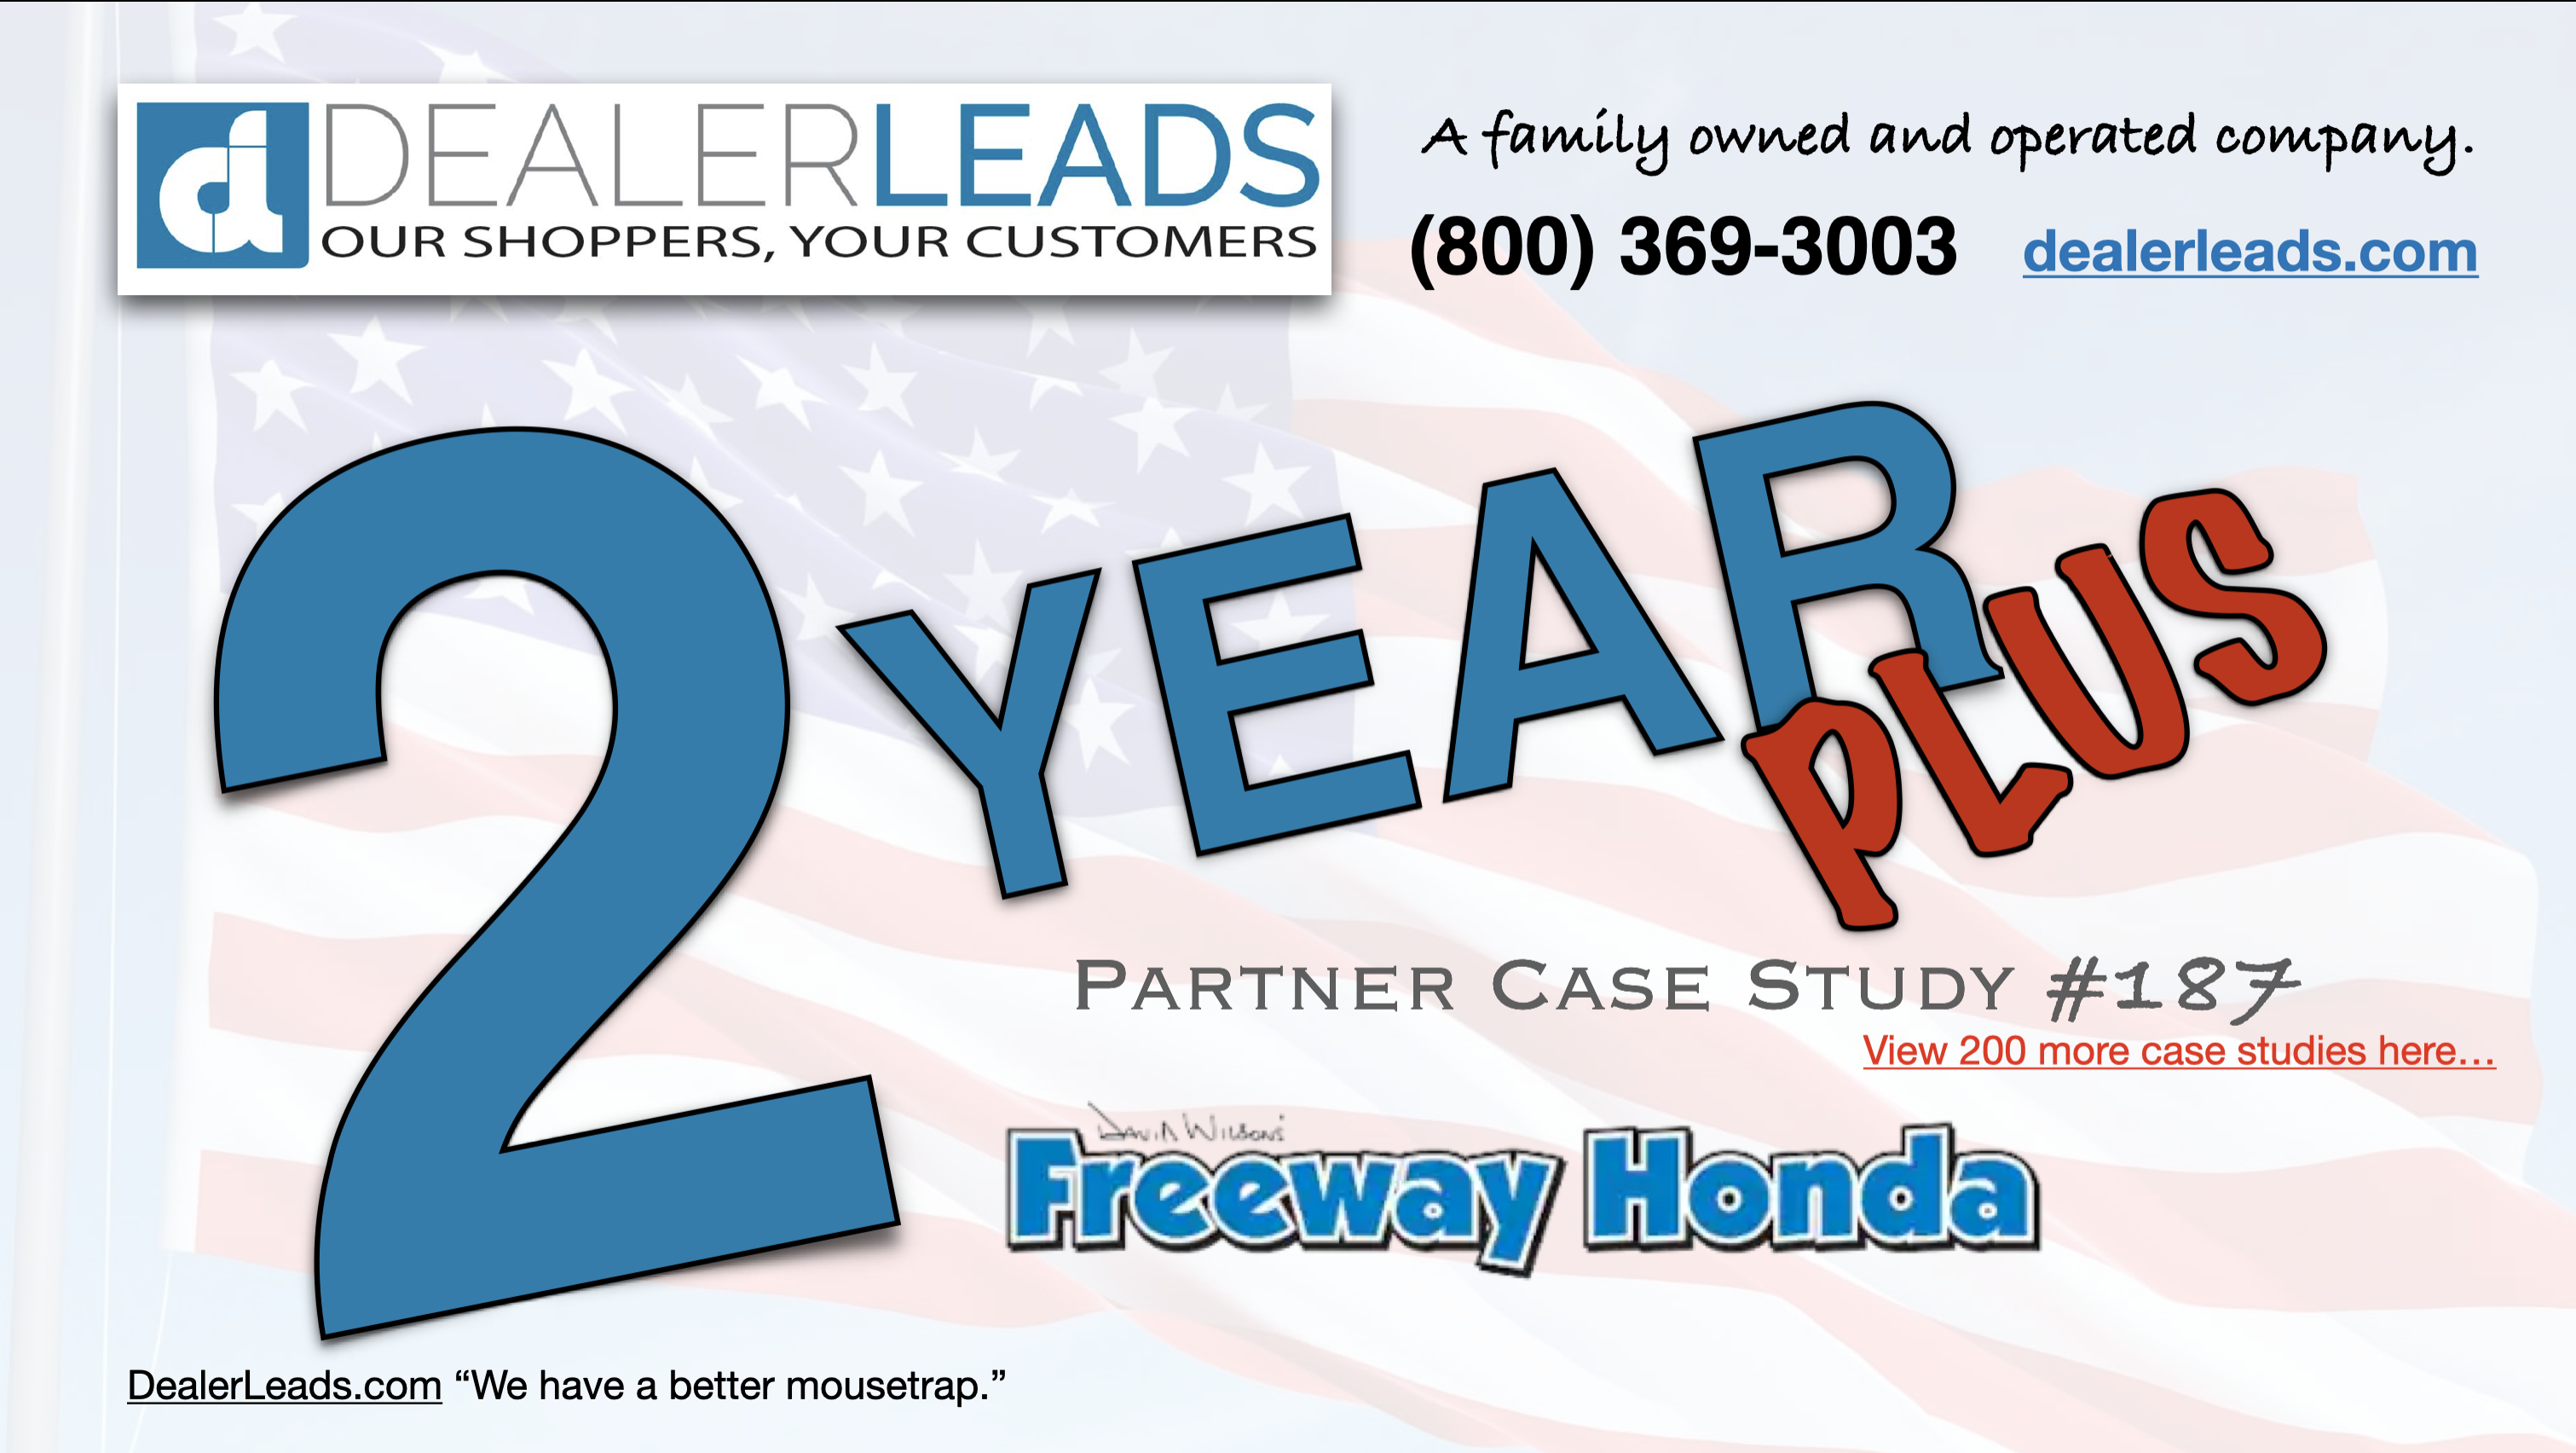 Freeway Honda – Santa Ana, CA 2 Year Case Study